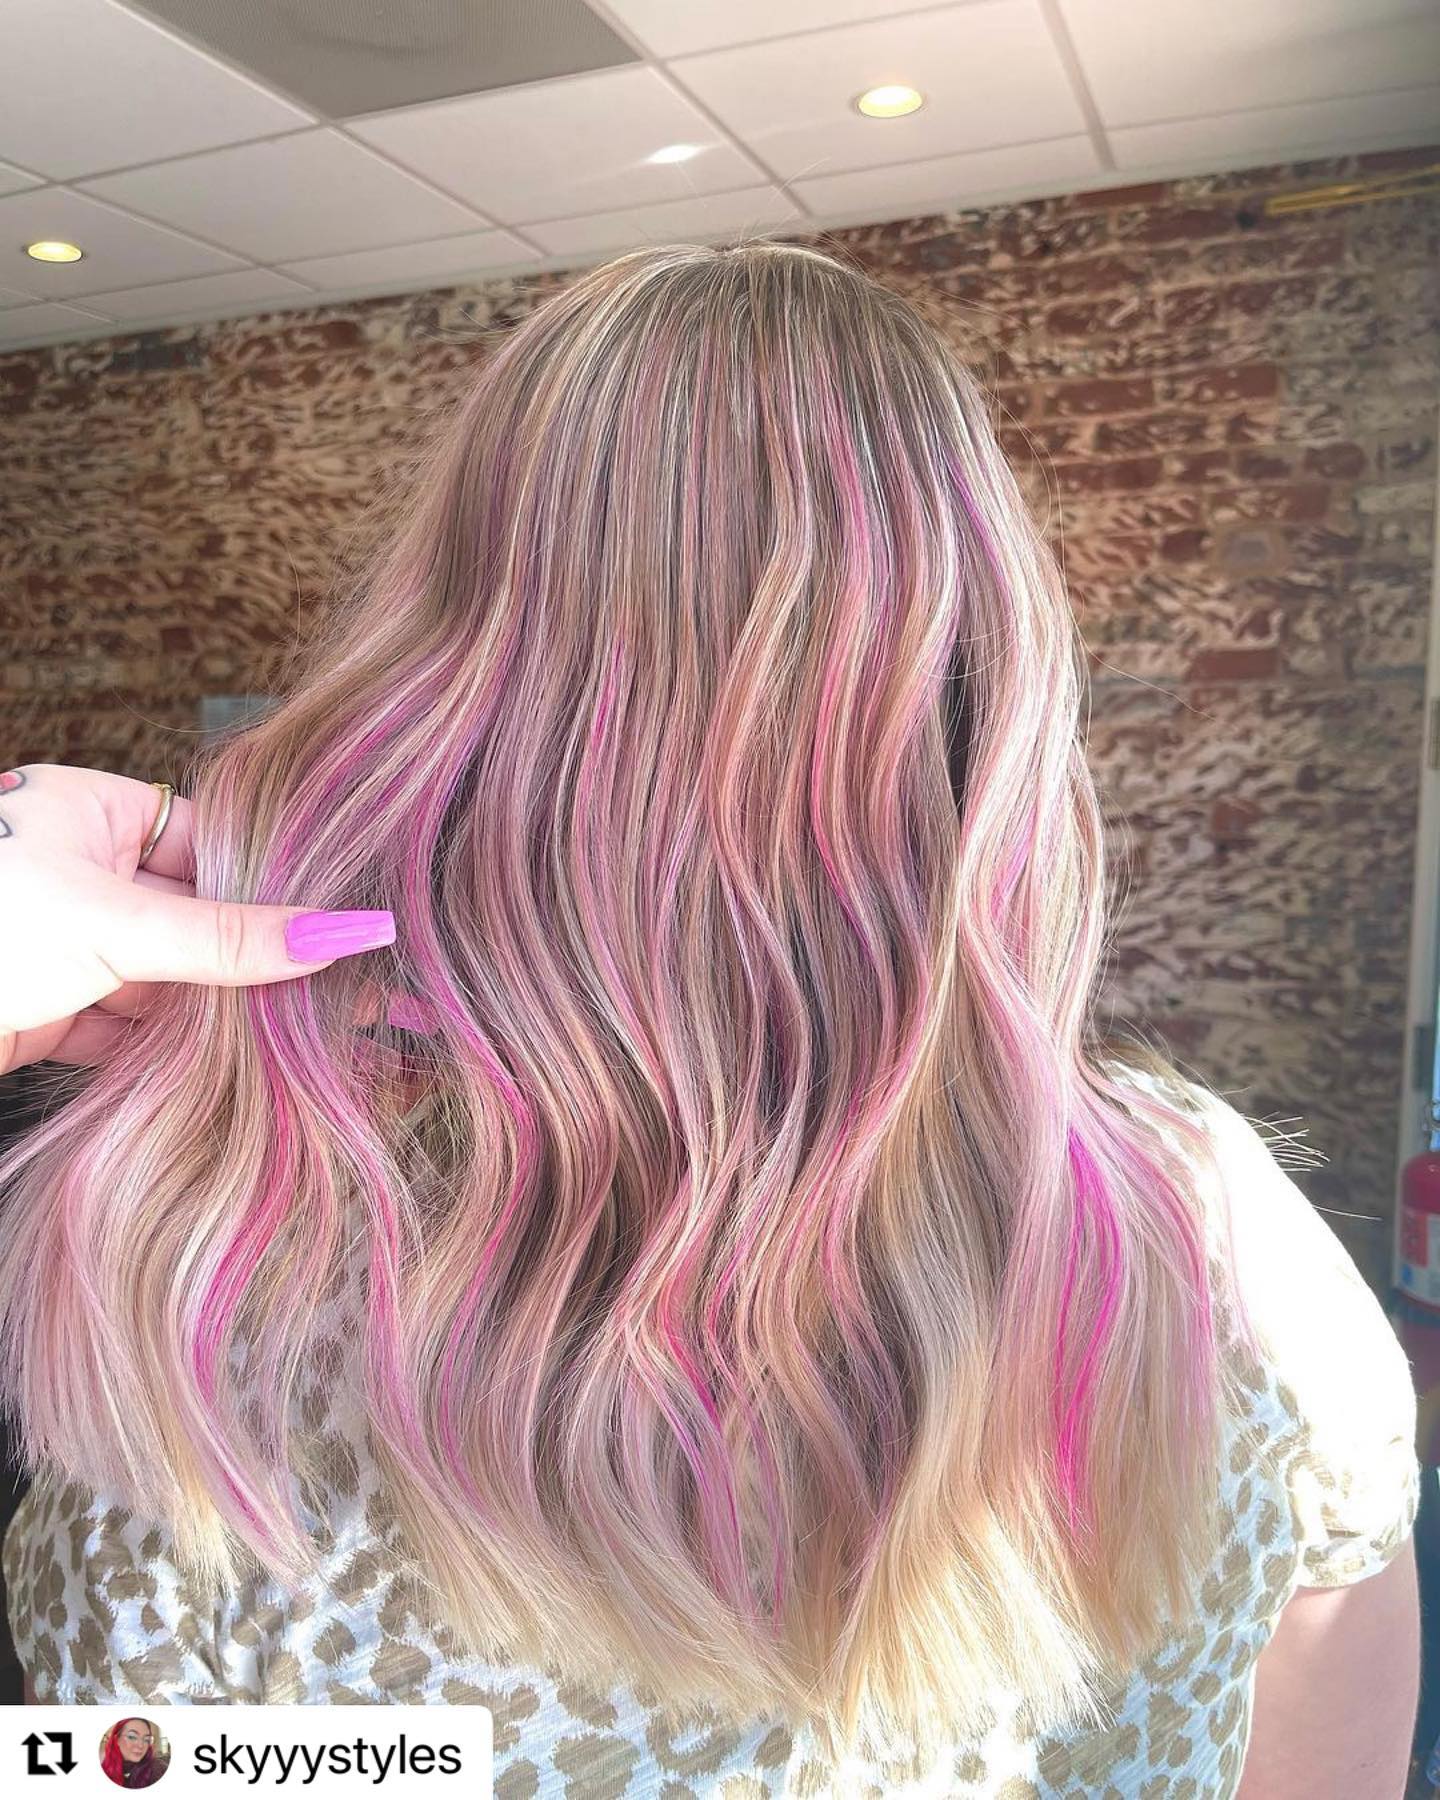 275705997 1112922532862085 4412990074102601763 n - Ombré hair rosa: 60 inspirações, trends